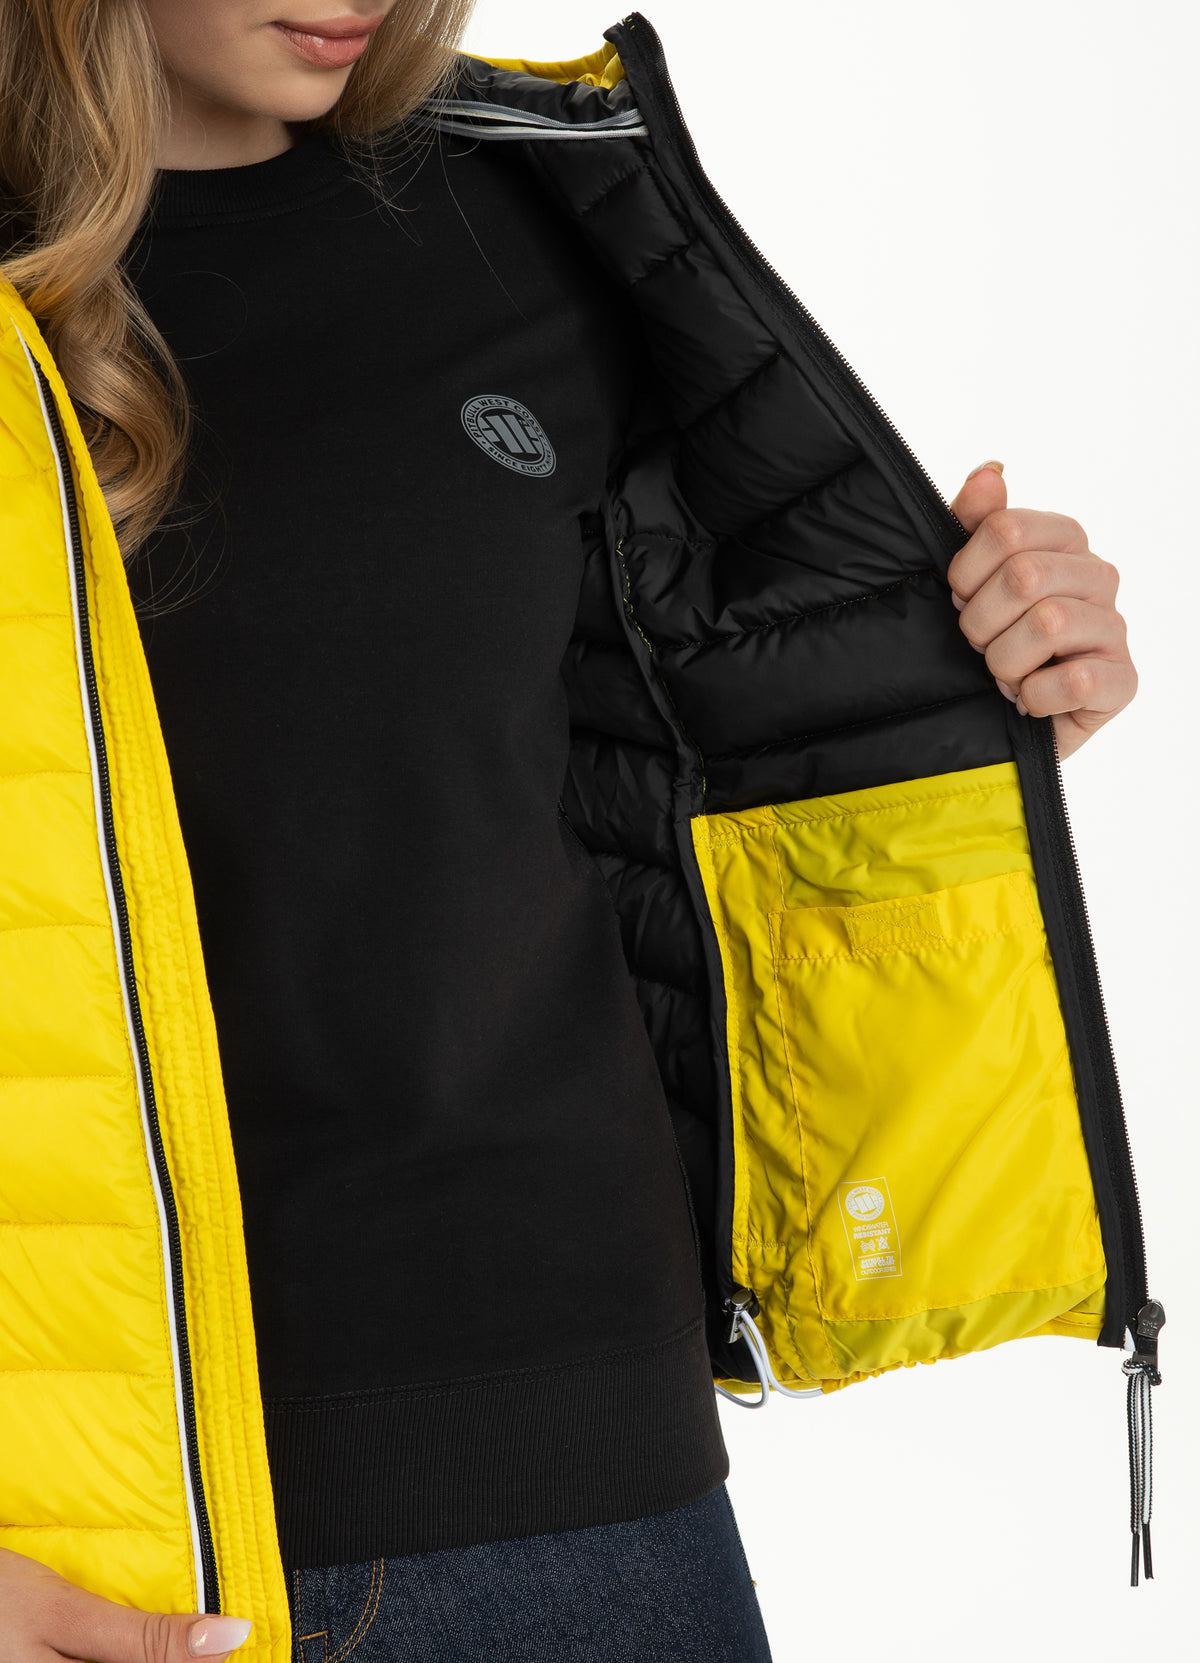 Seacoast Yellow Padded Jacket.